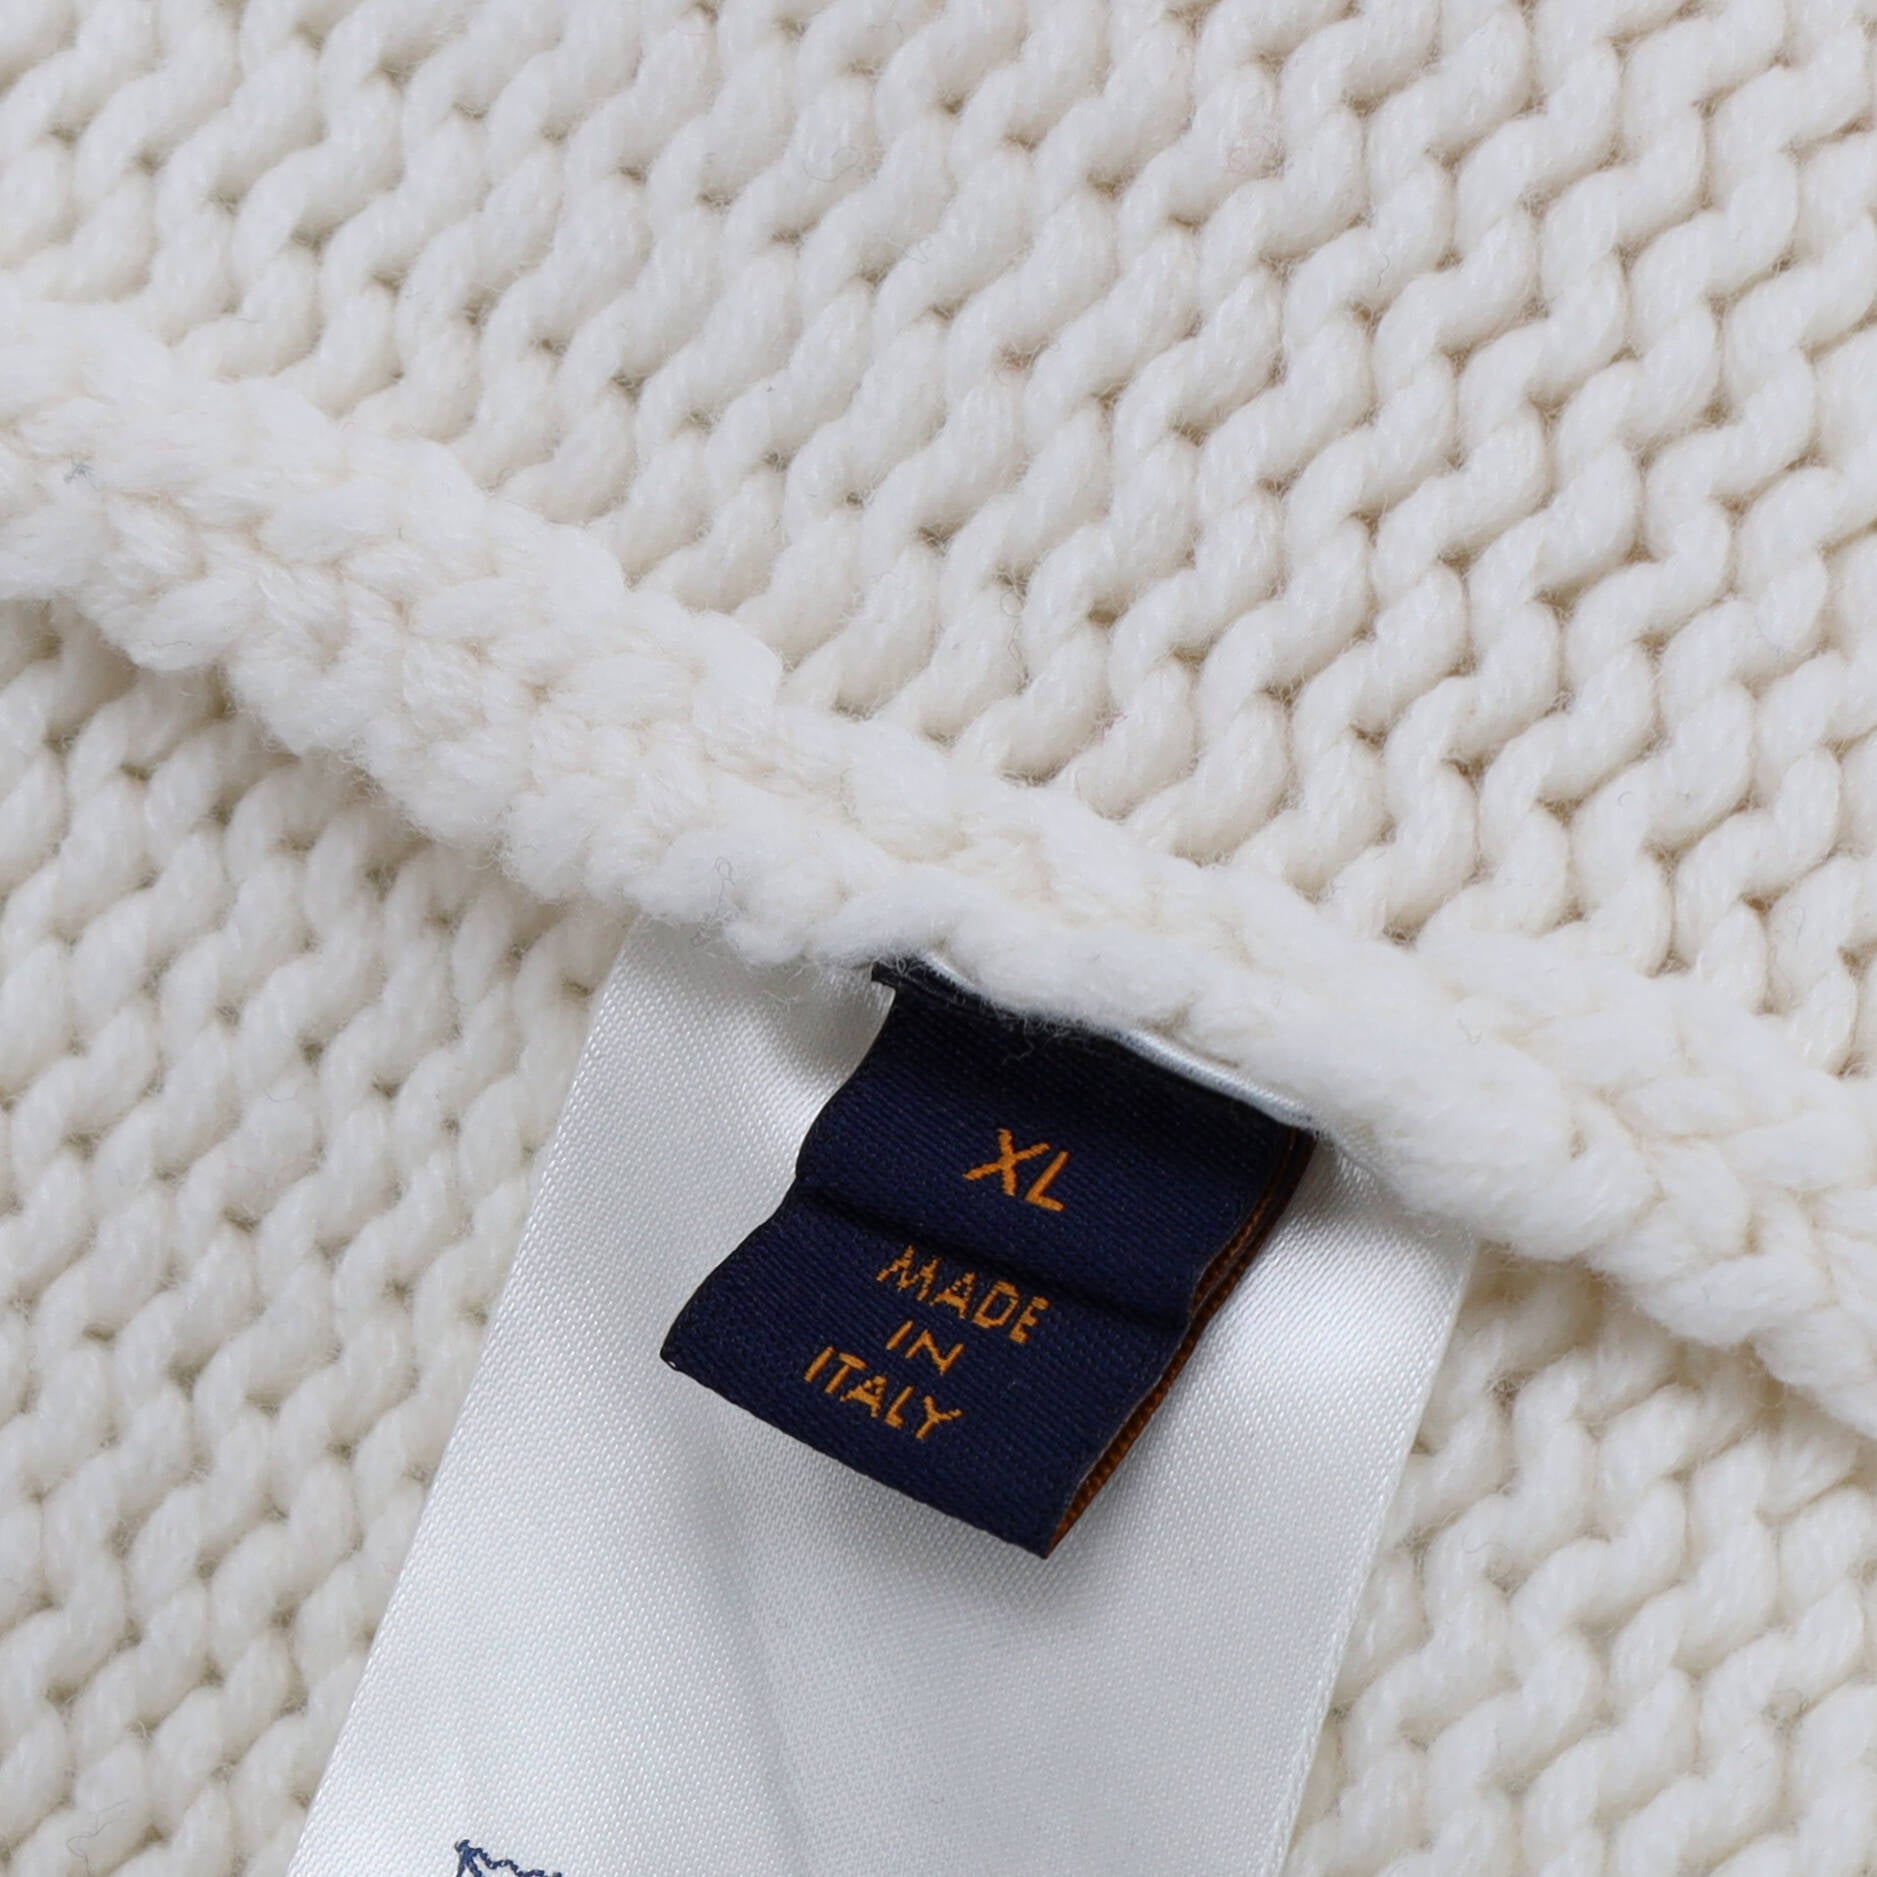 Louis Vuitton Men's Graphic Zip Up Long Cardigan Wool